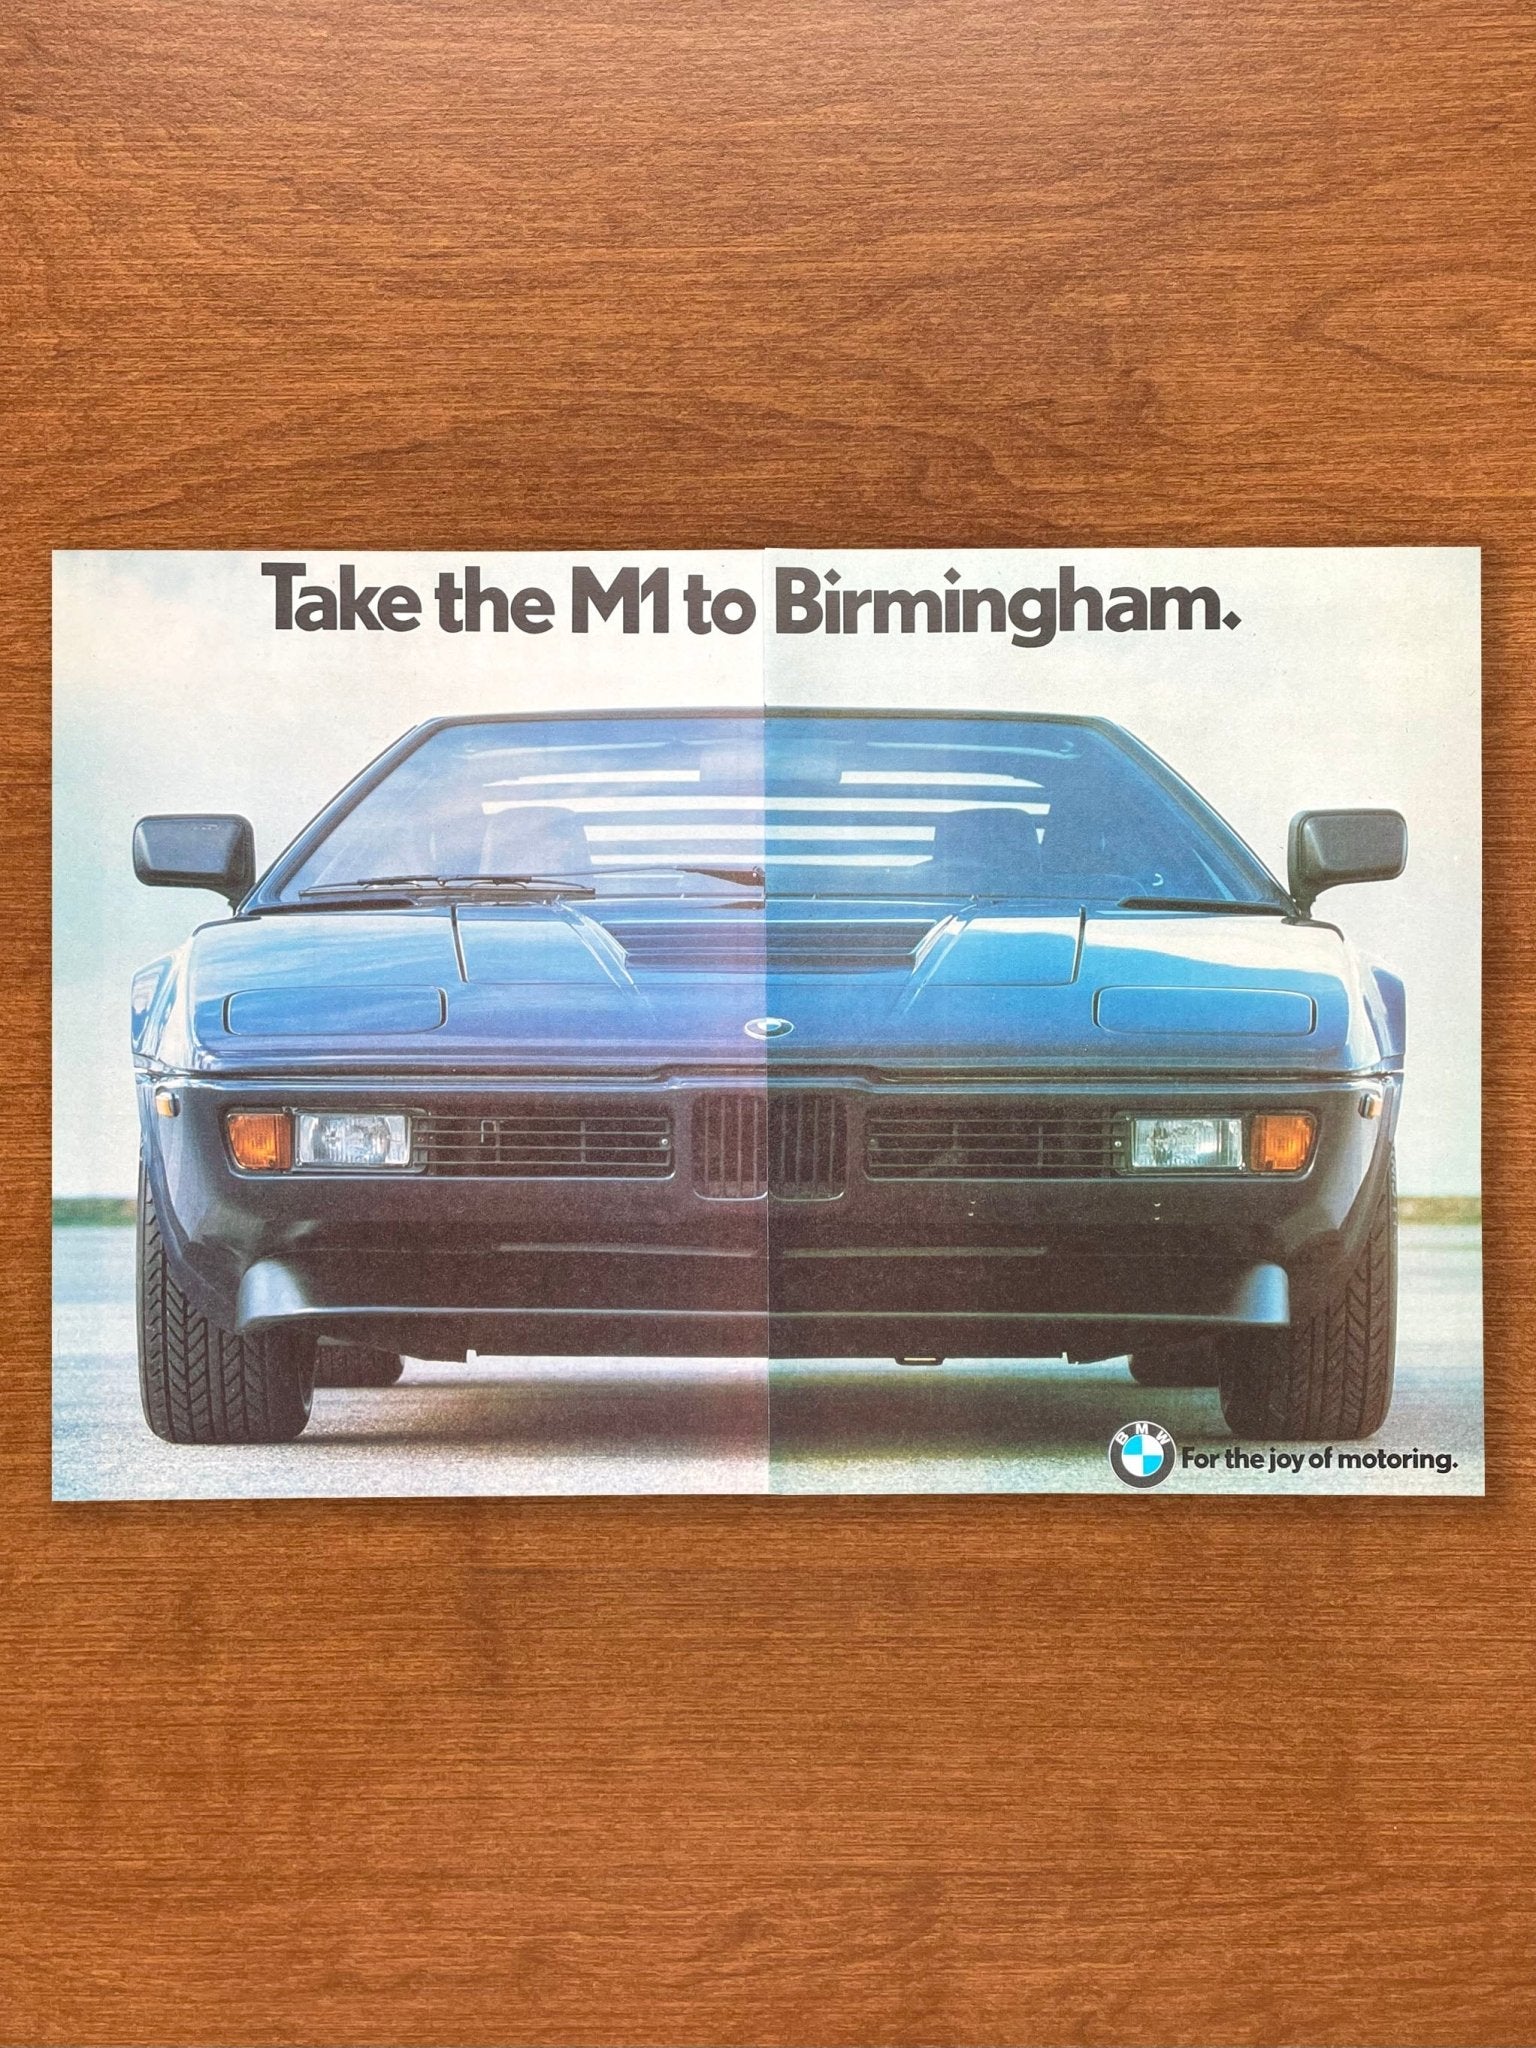 1978 BMW "Take the M1 to Birmingham." Advertisement